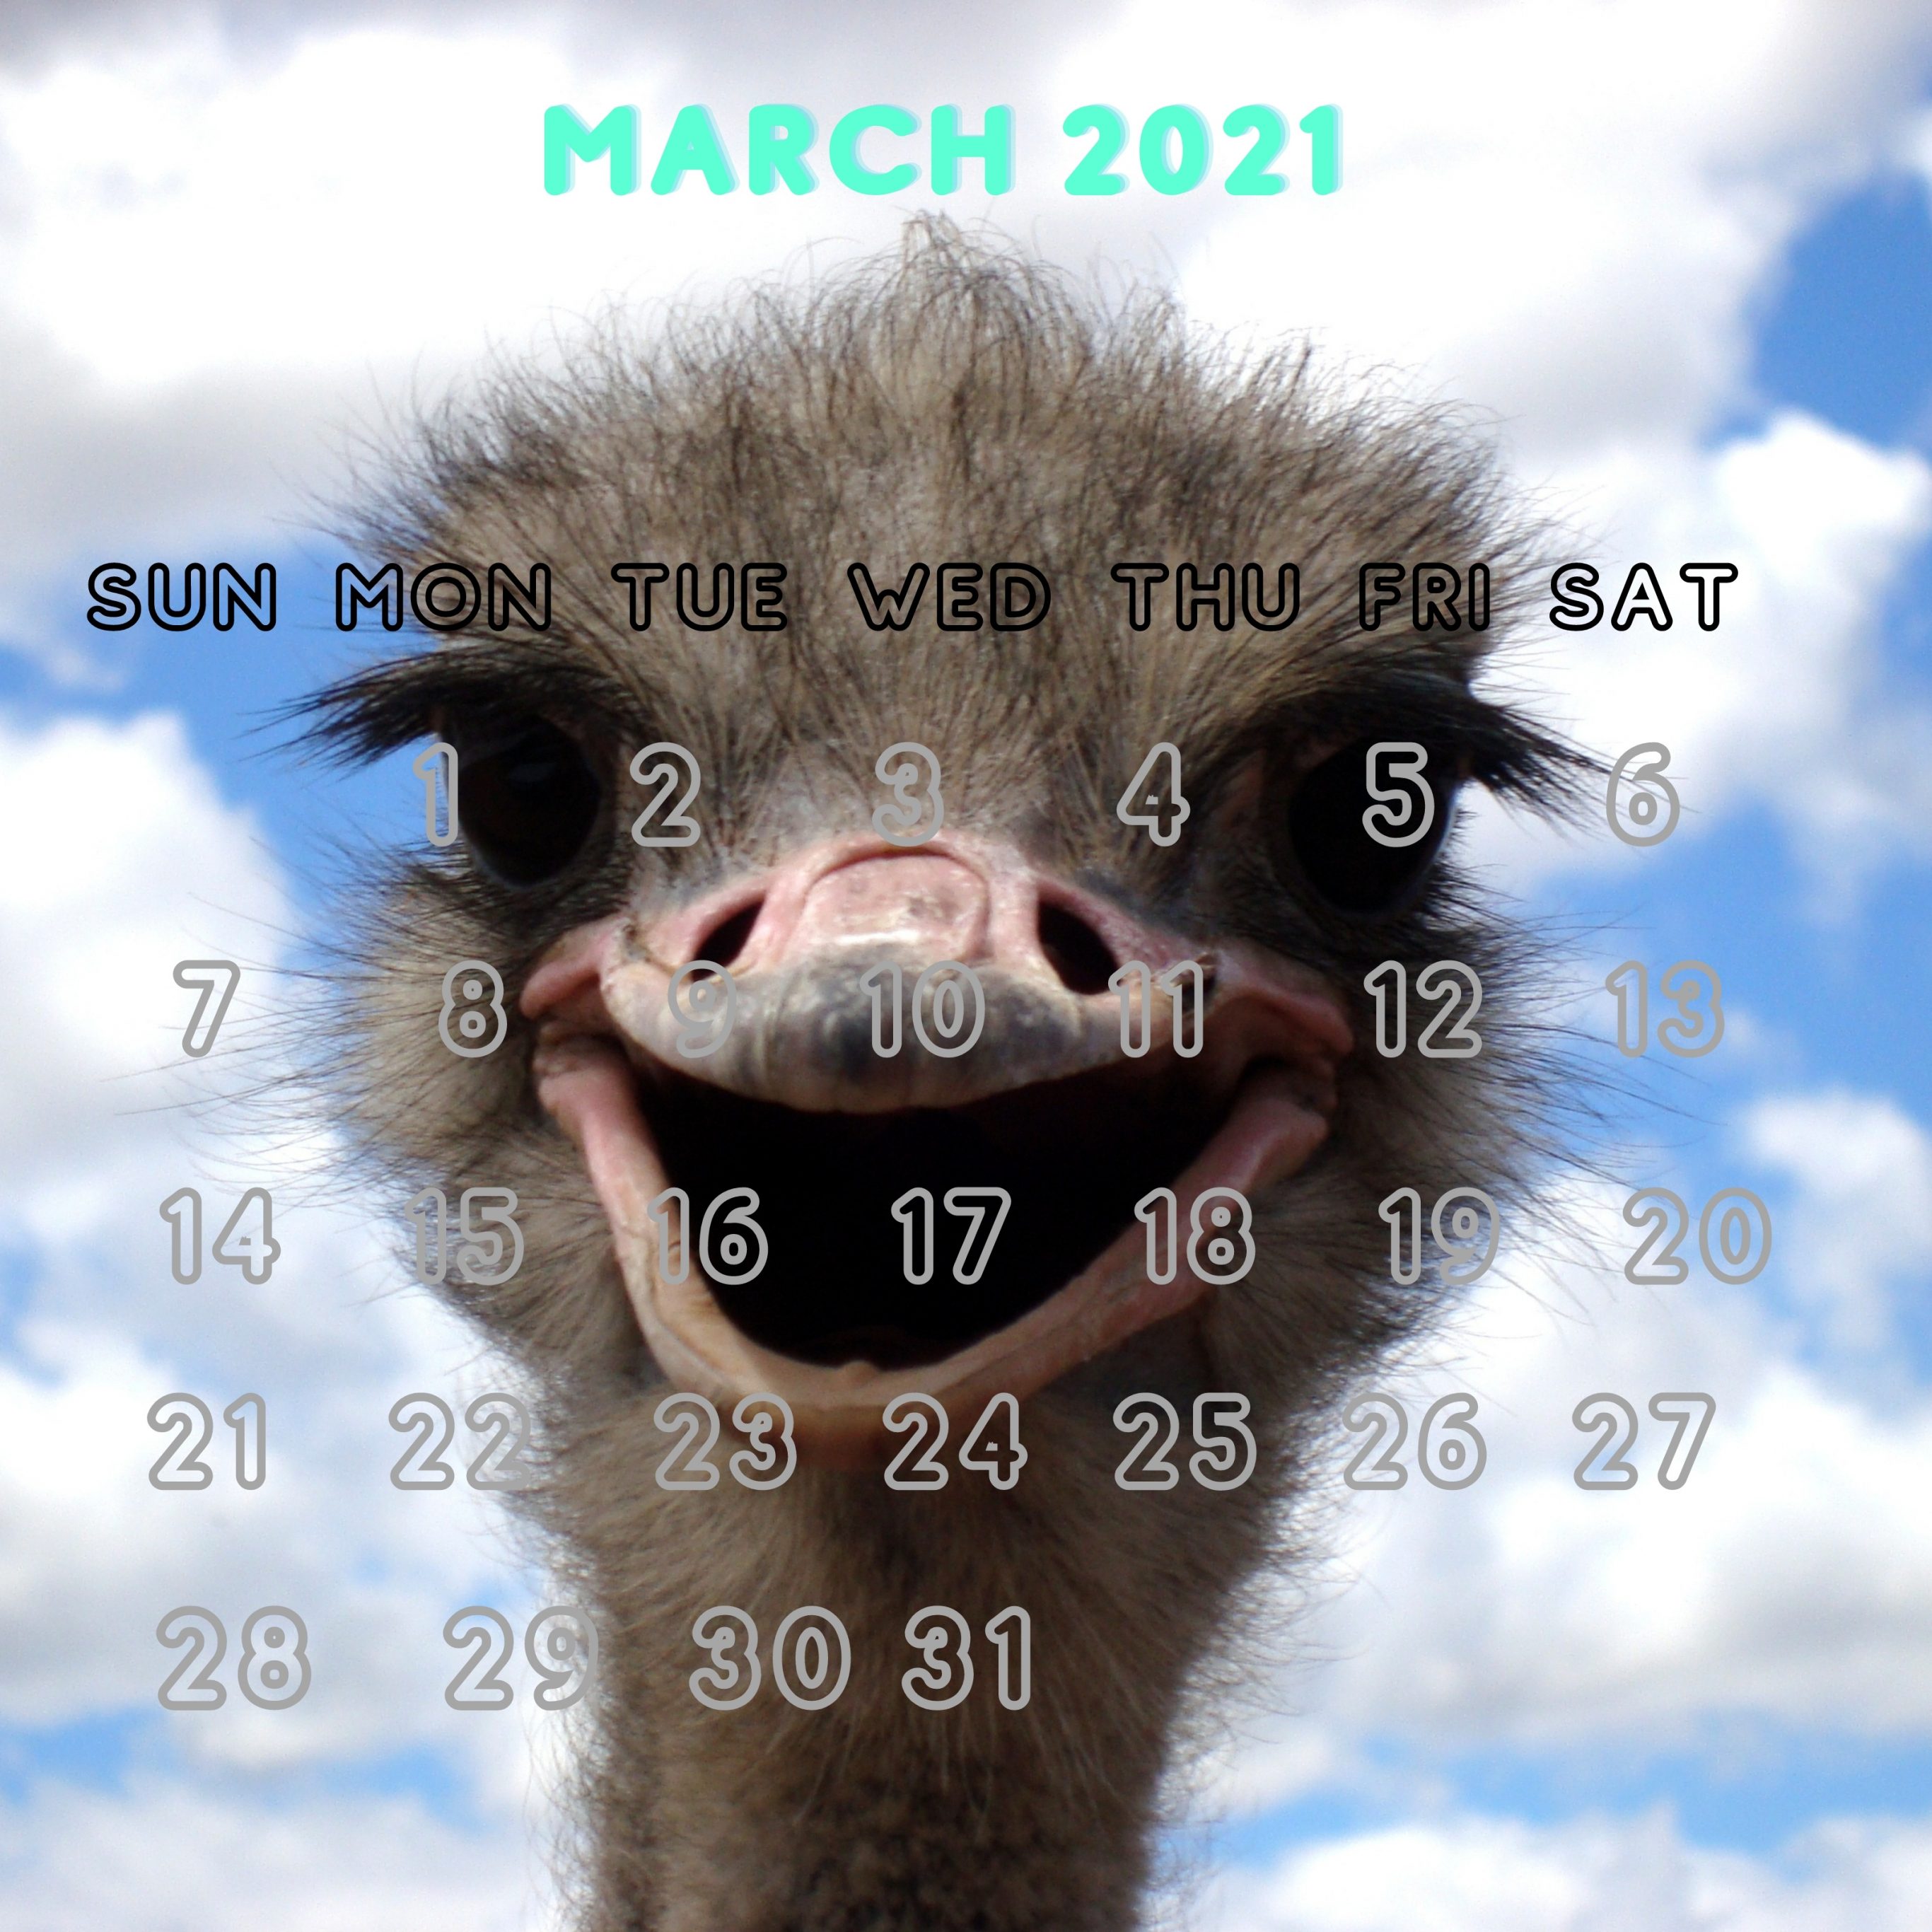 2732x2732 wallpapers 4k iPad Pro March 2021 Ostrich Smiling iPad Wallpaper 2732x2732 pixels resolution